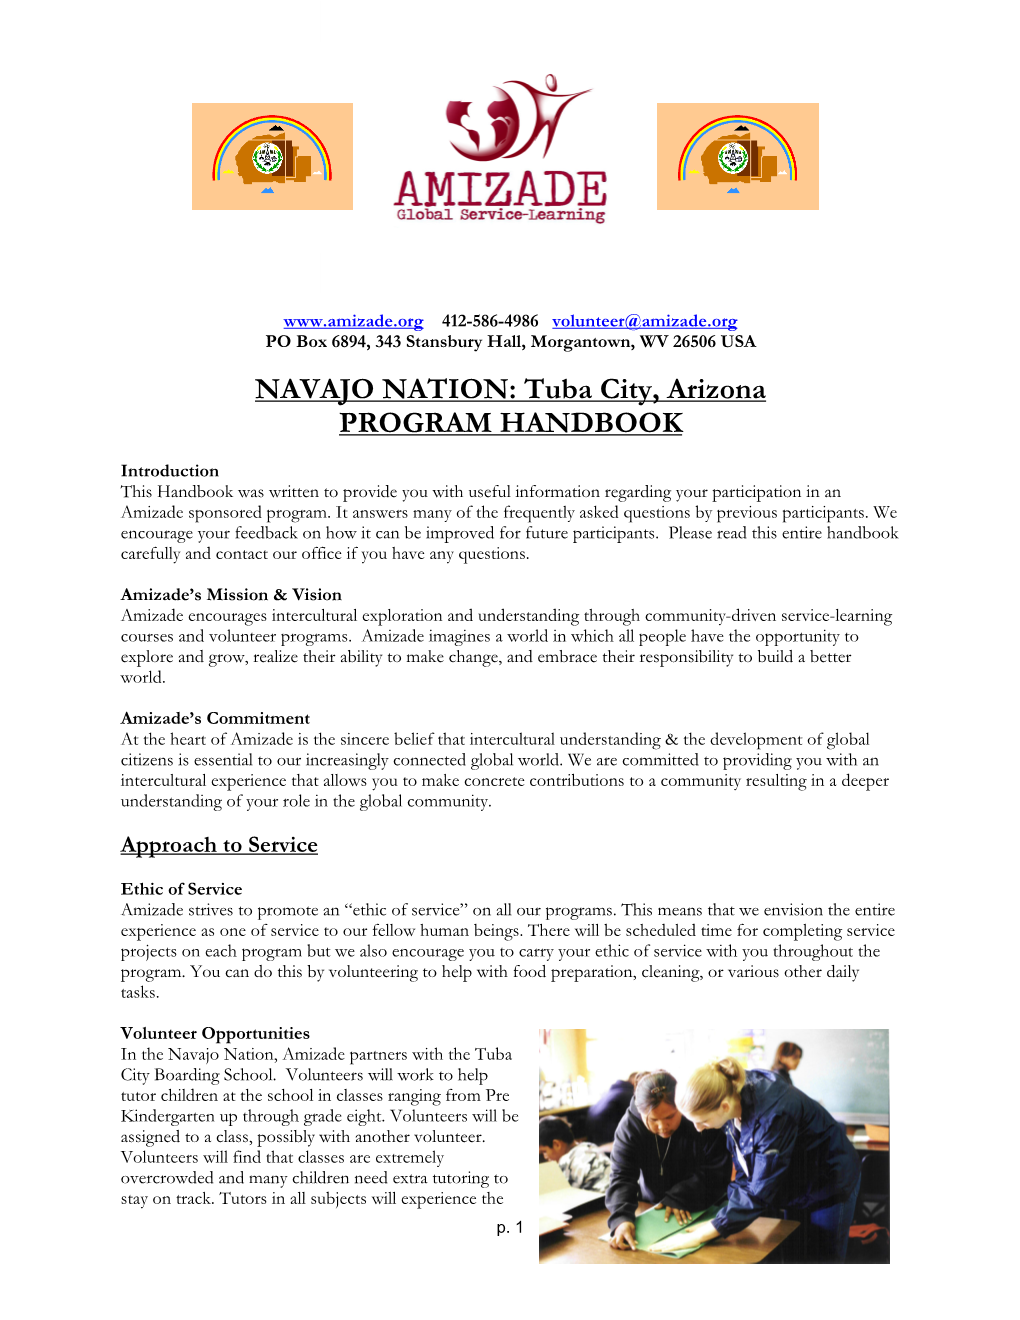 NAVAJO NATION: Tuba City, Arizona PROGRAM HANDBOOK